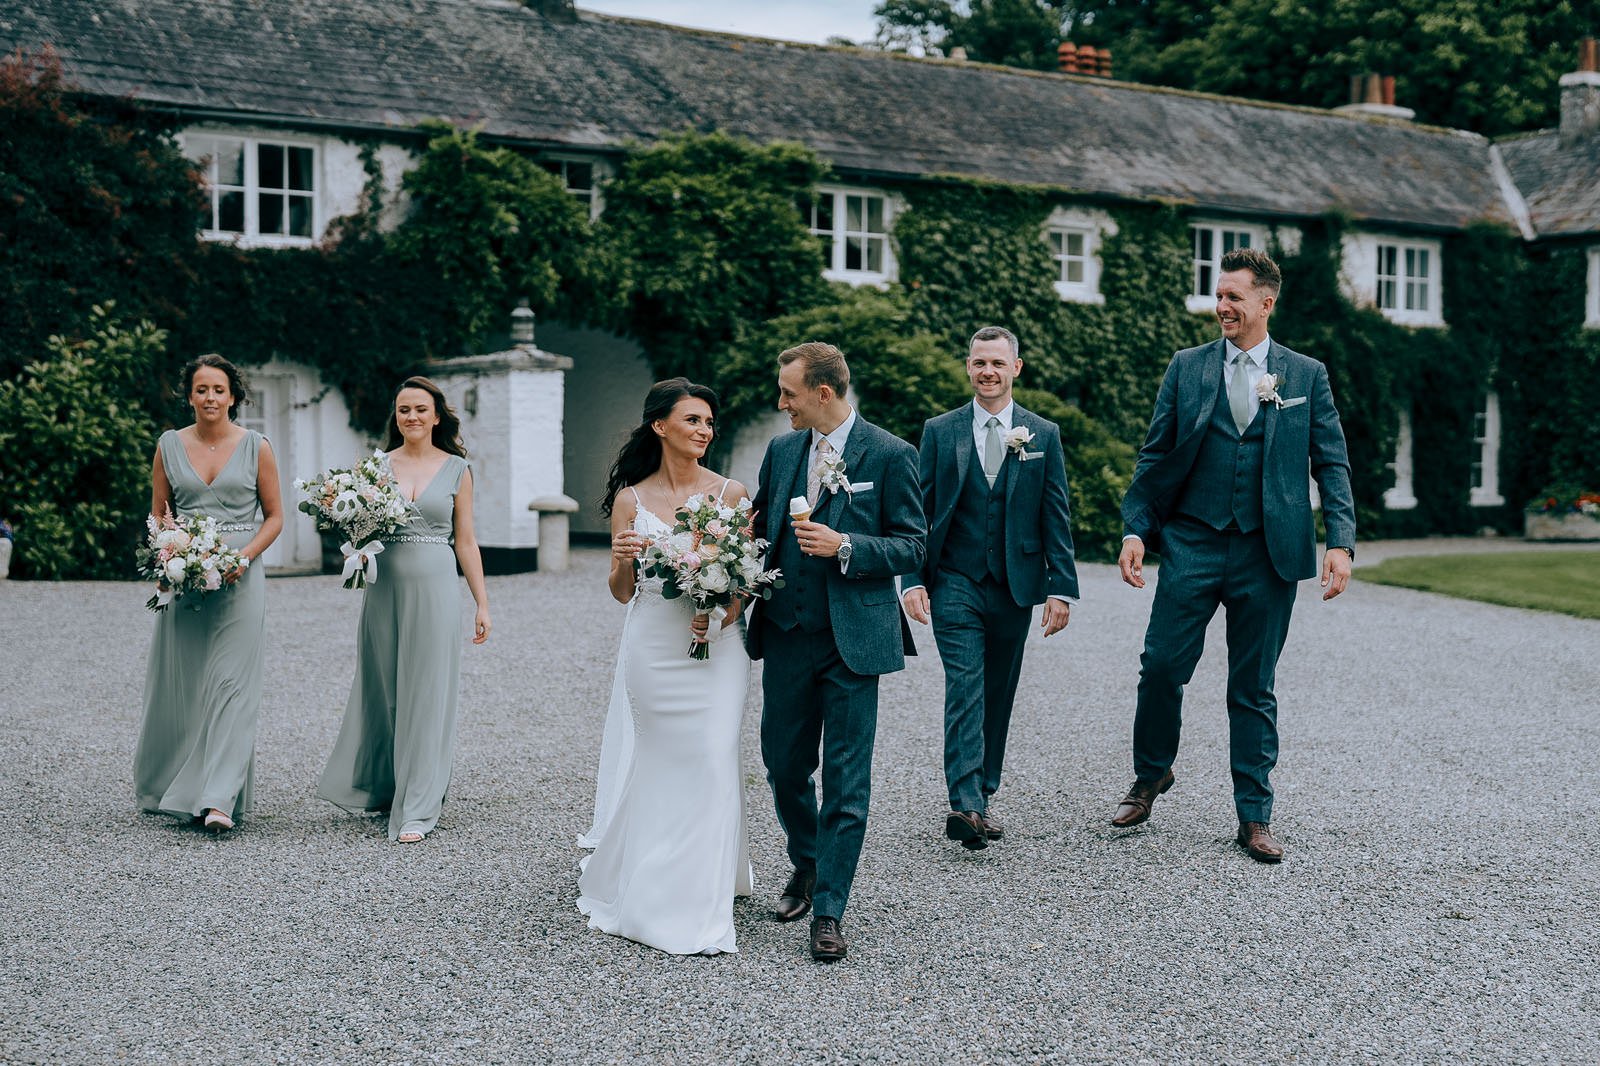 Rathsallagh_House-best-wedding-venues-Ireland-22.jpg